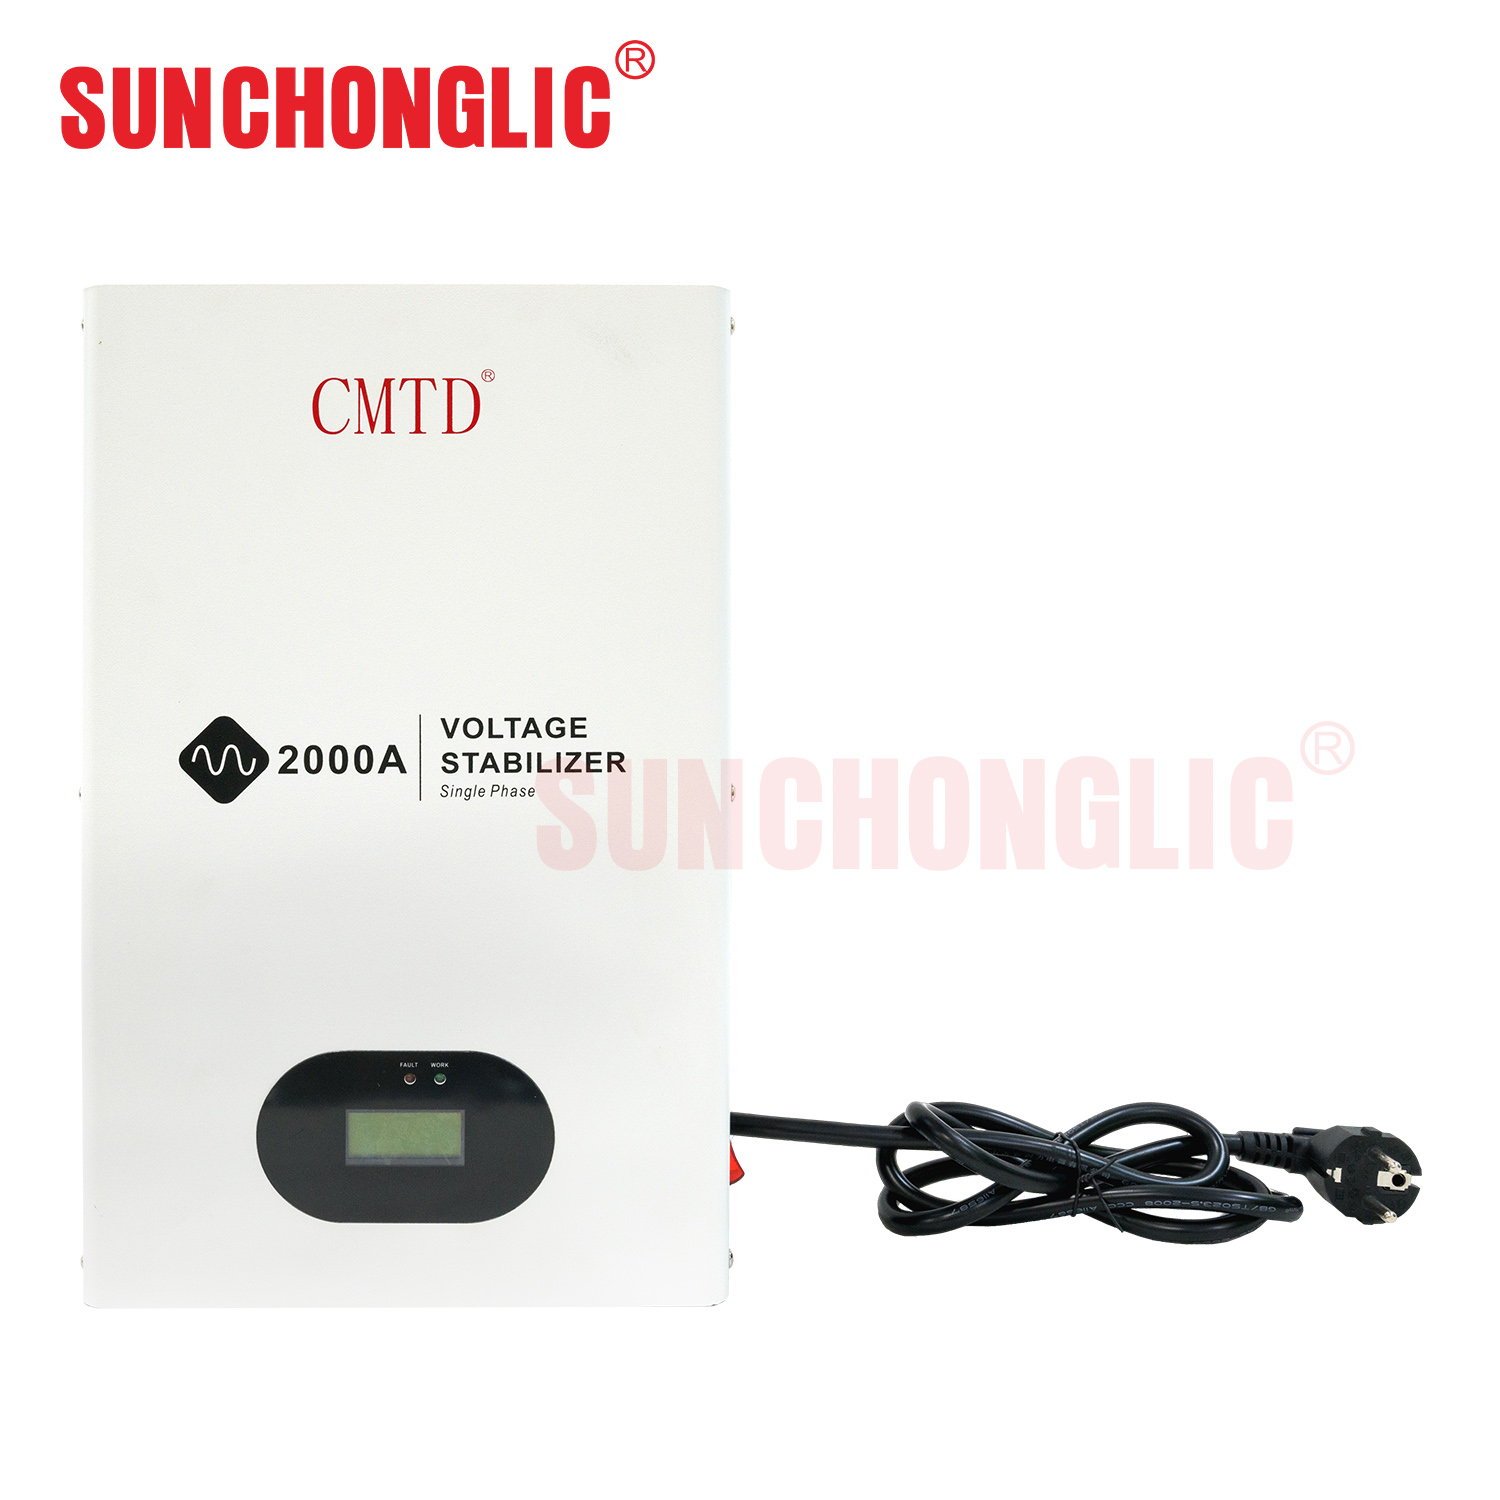 Sunchonglic 2000w 220v AC single phase voltage stabilizer